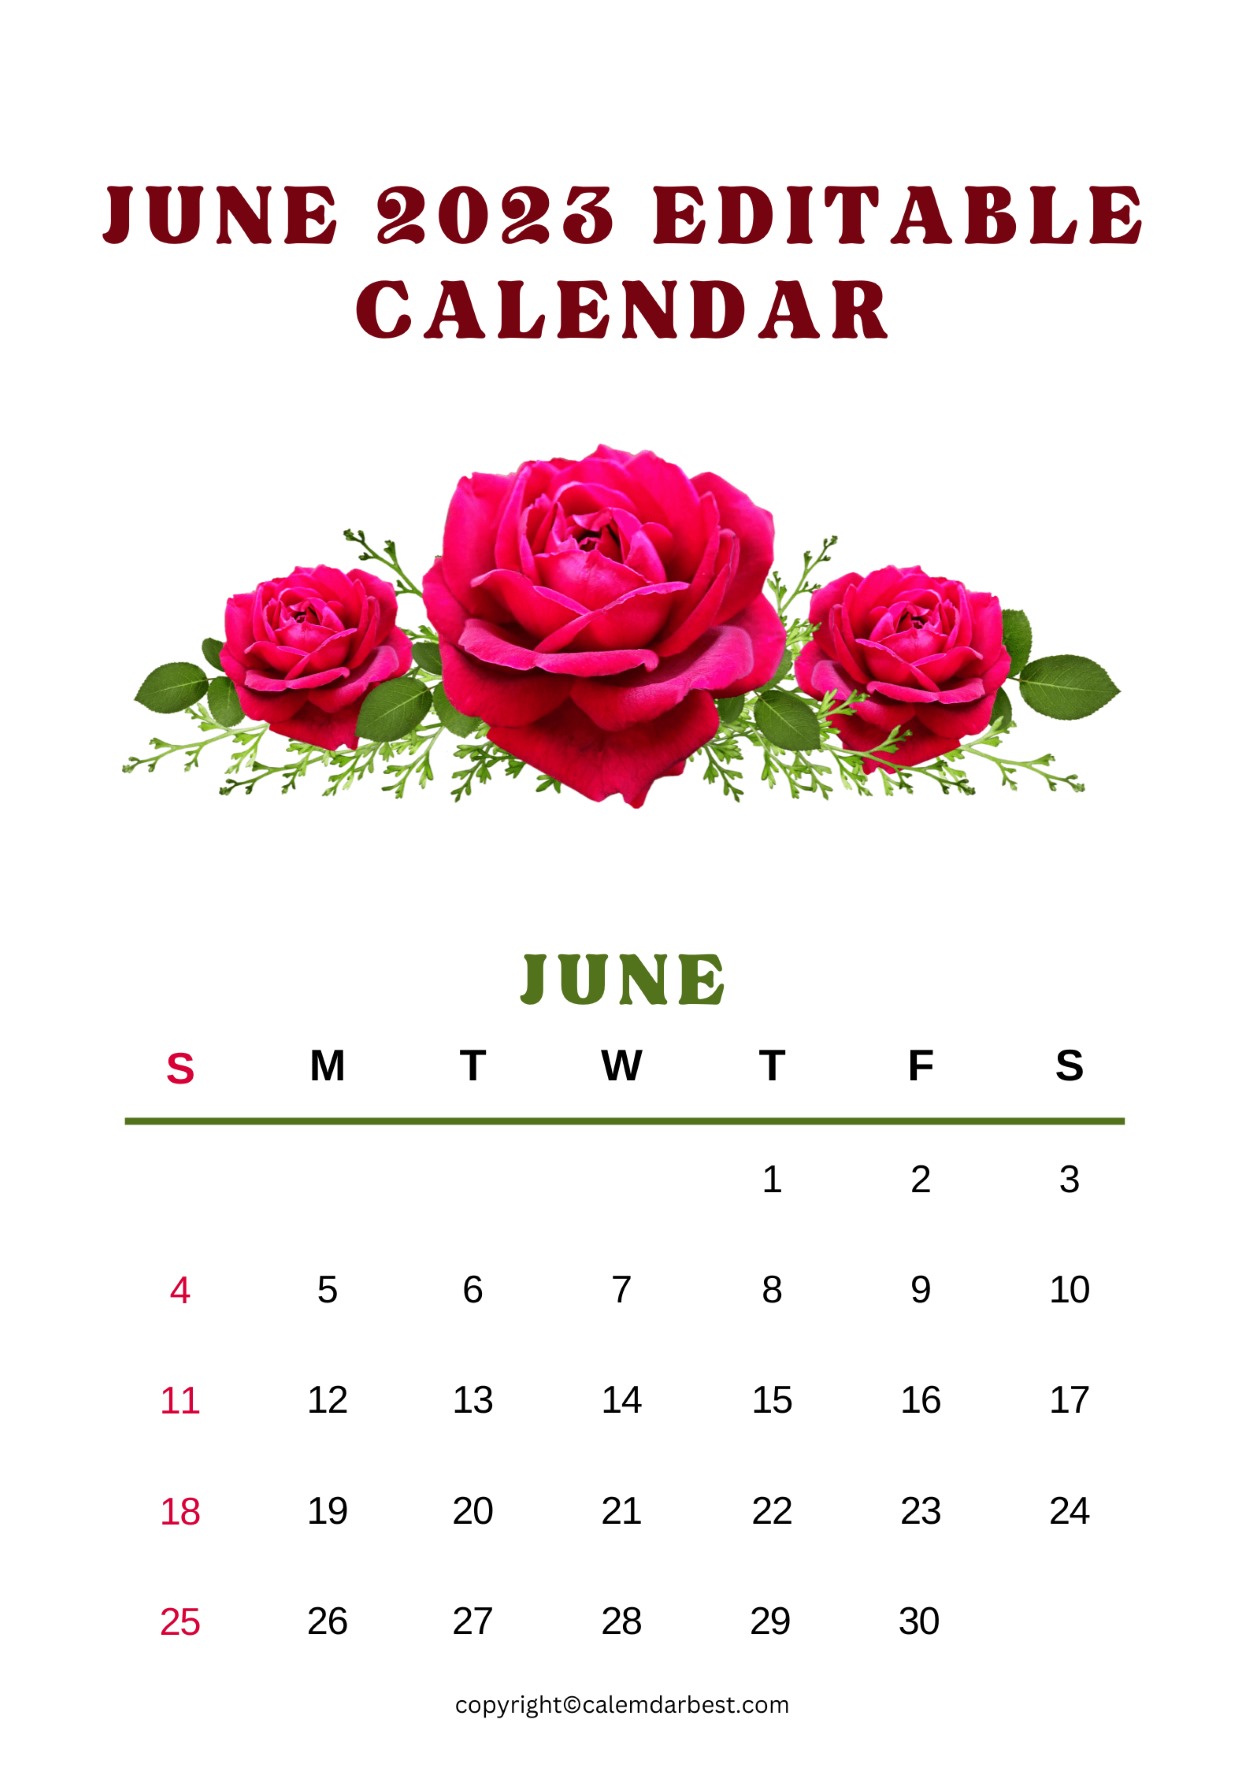 June 2023 Editable Calendar